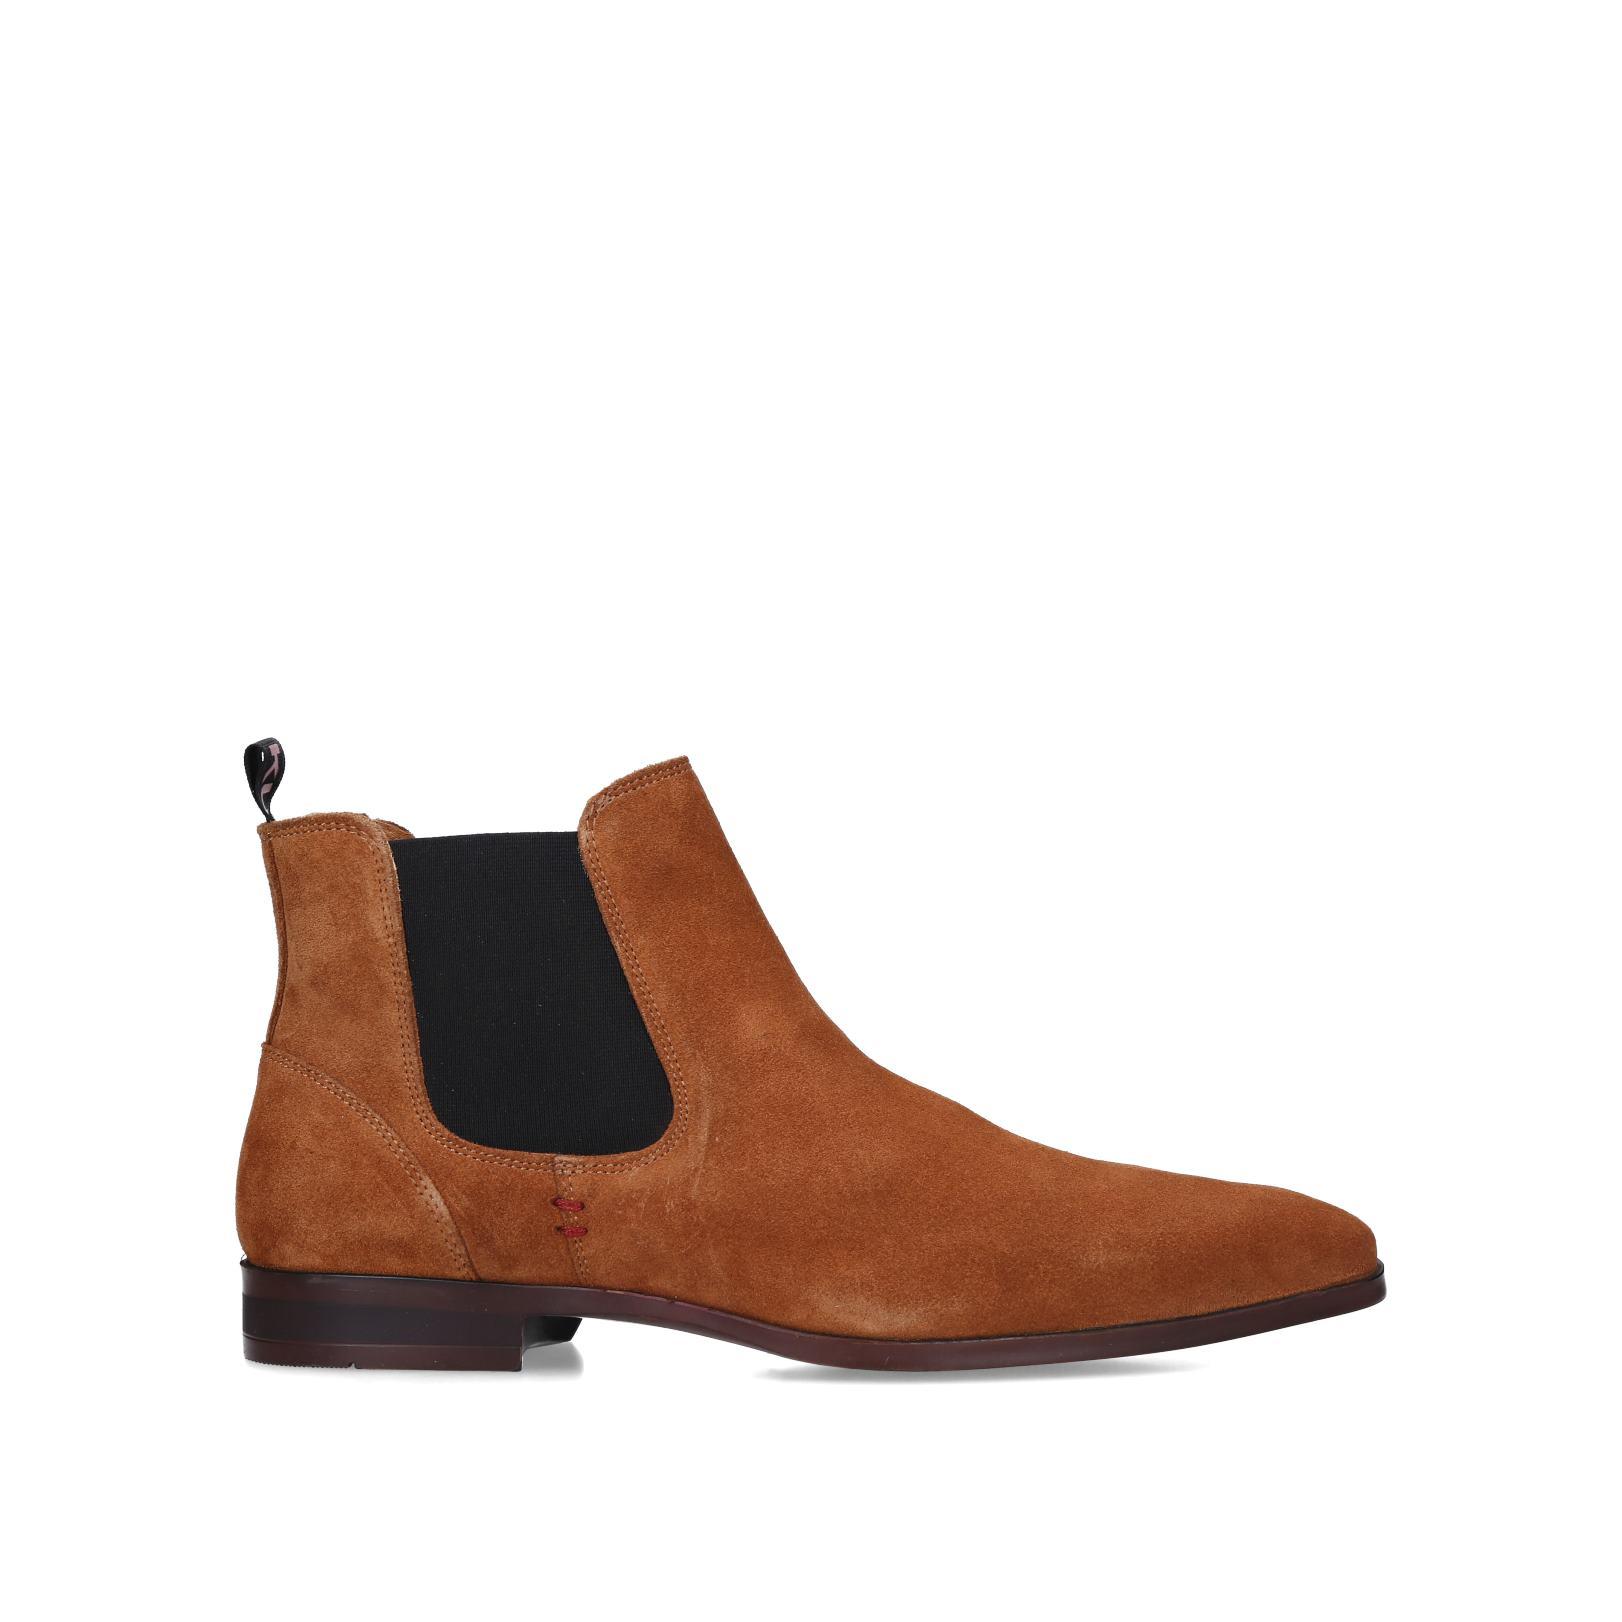 Just In Men's Designer Shoes & Boots | Shoeaholics